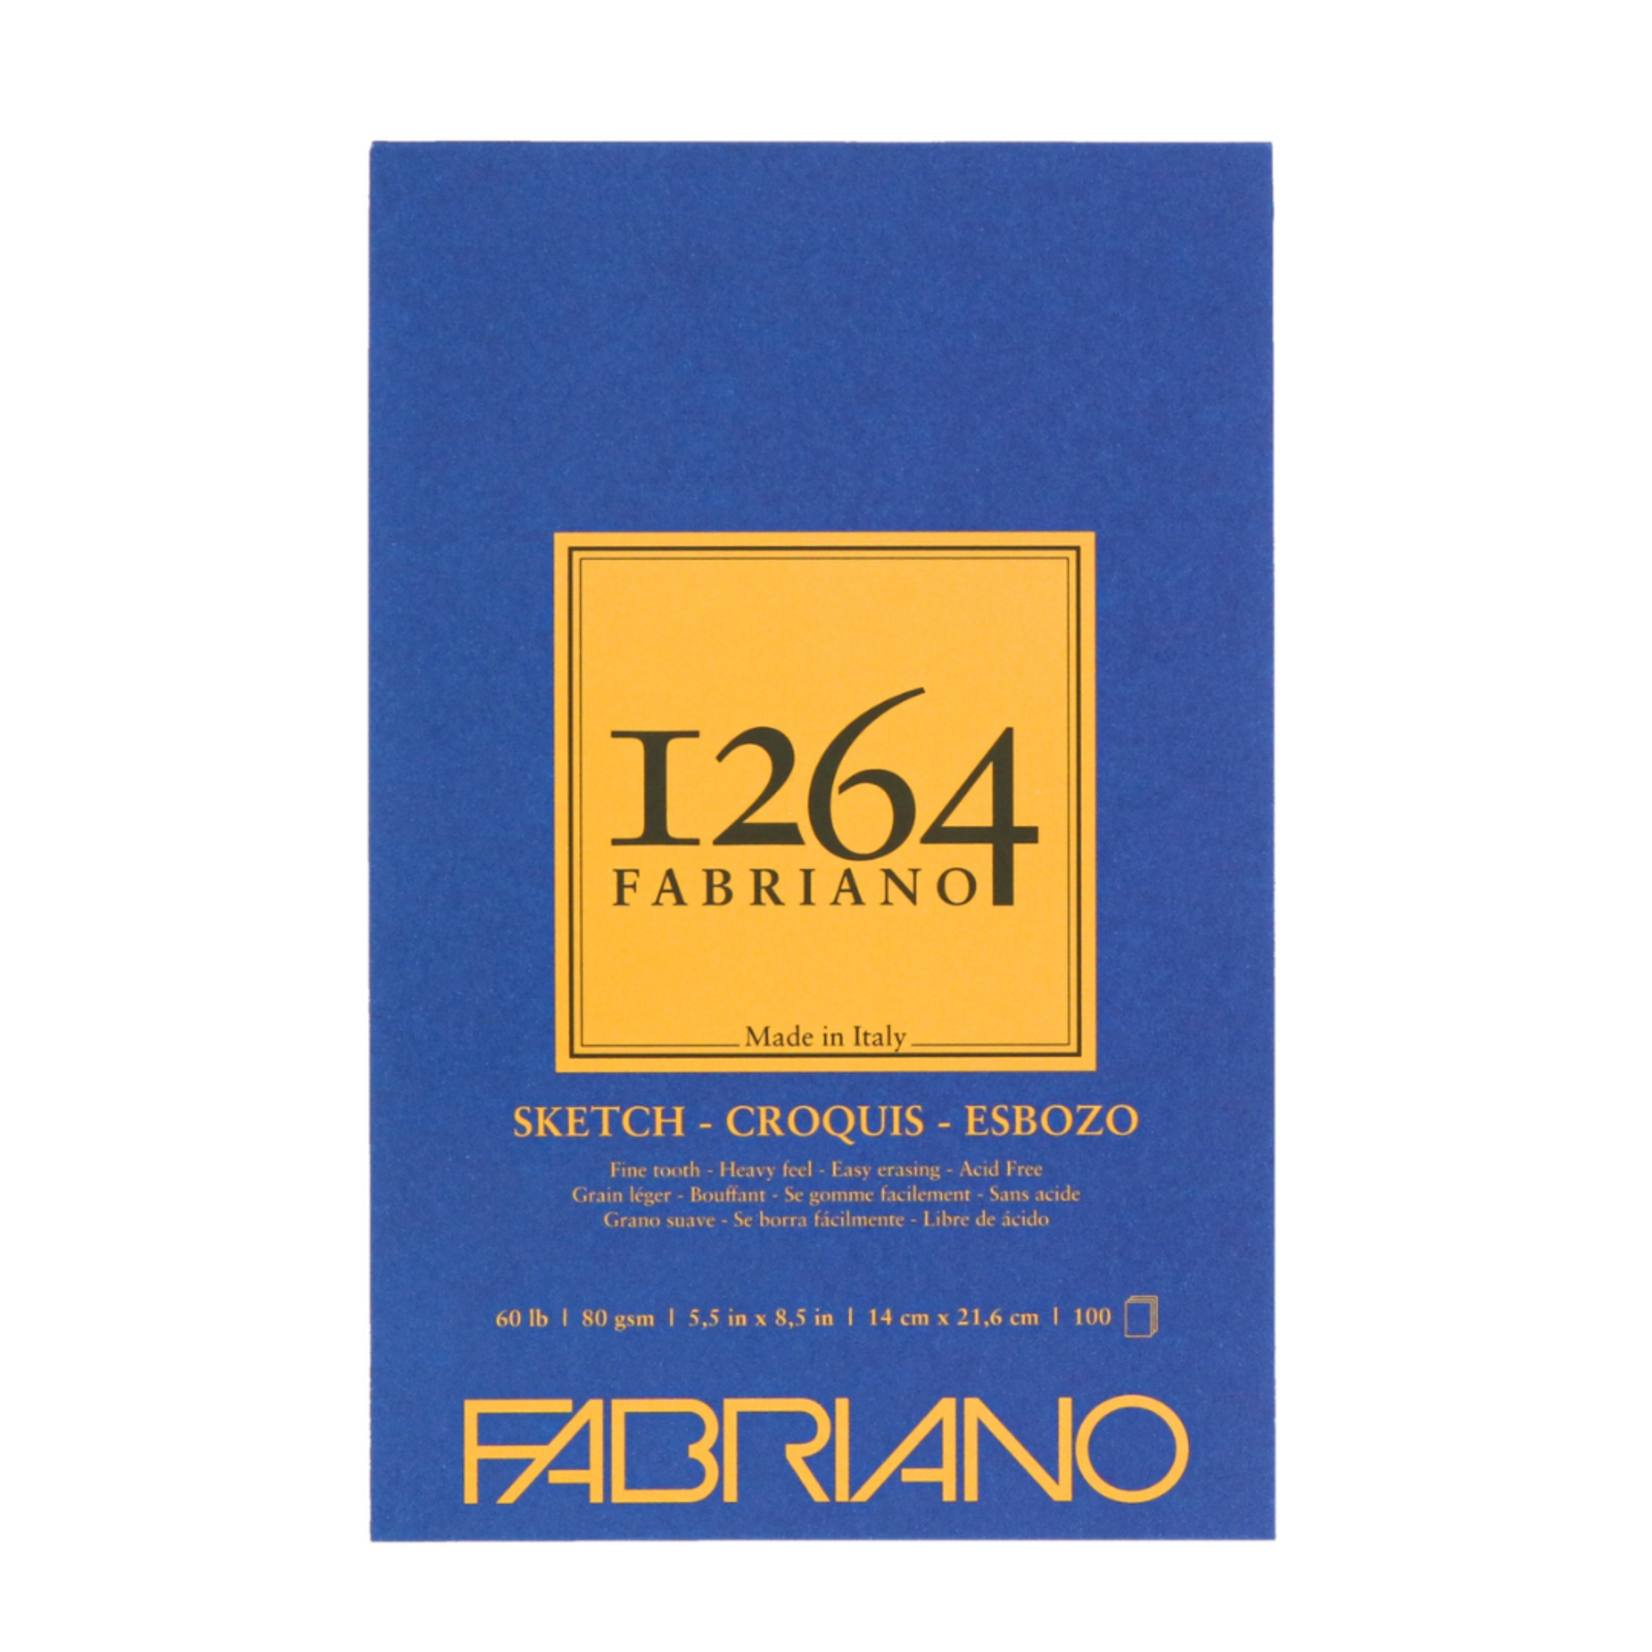 FABRIANO 1264 SKETCH 60LB 5.5X8.5 100/SH